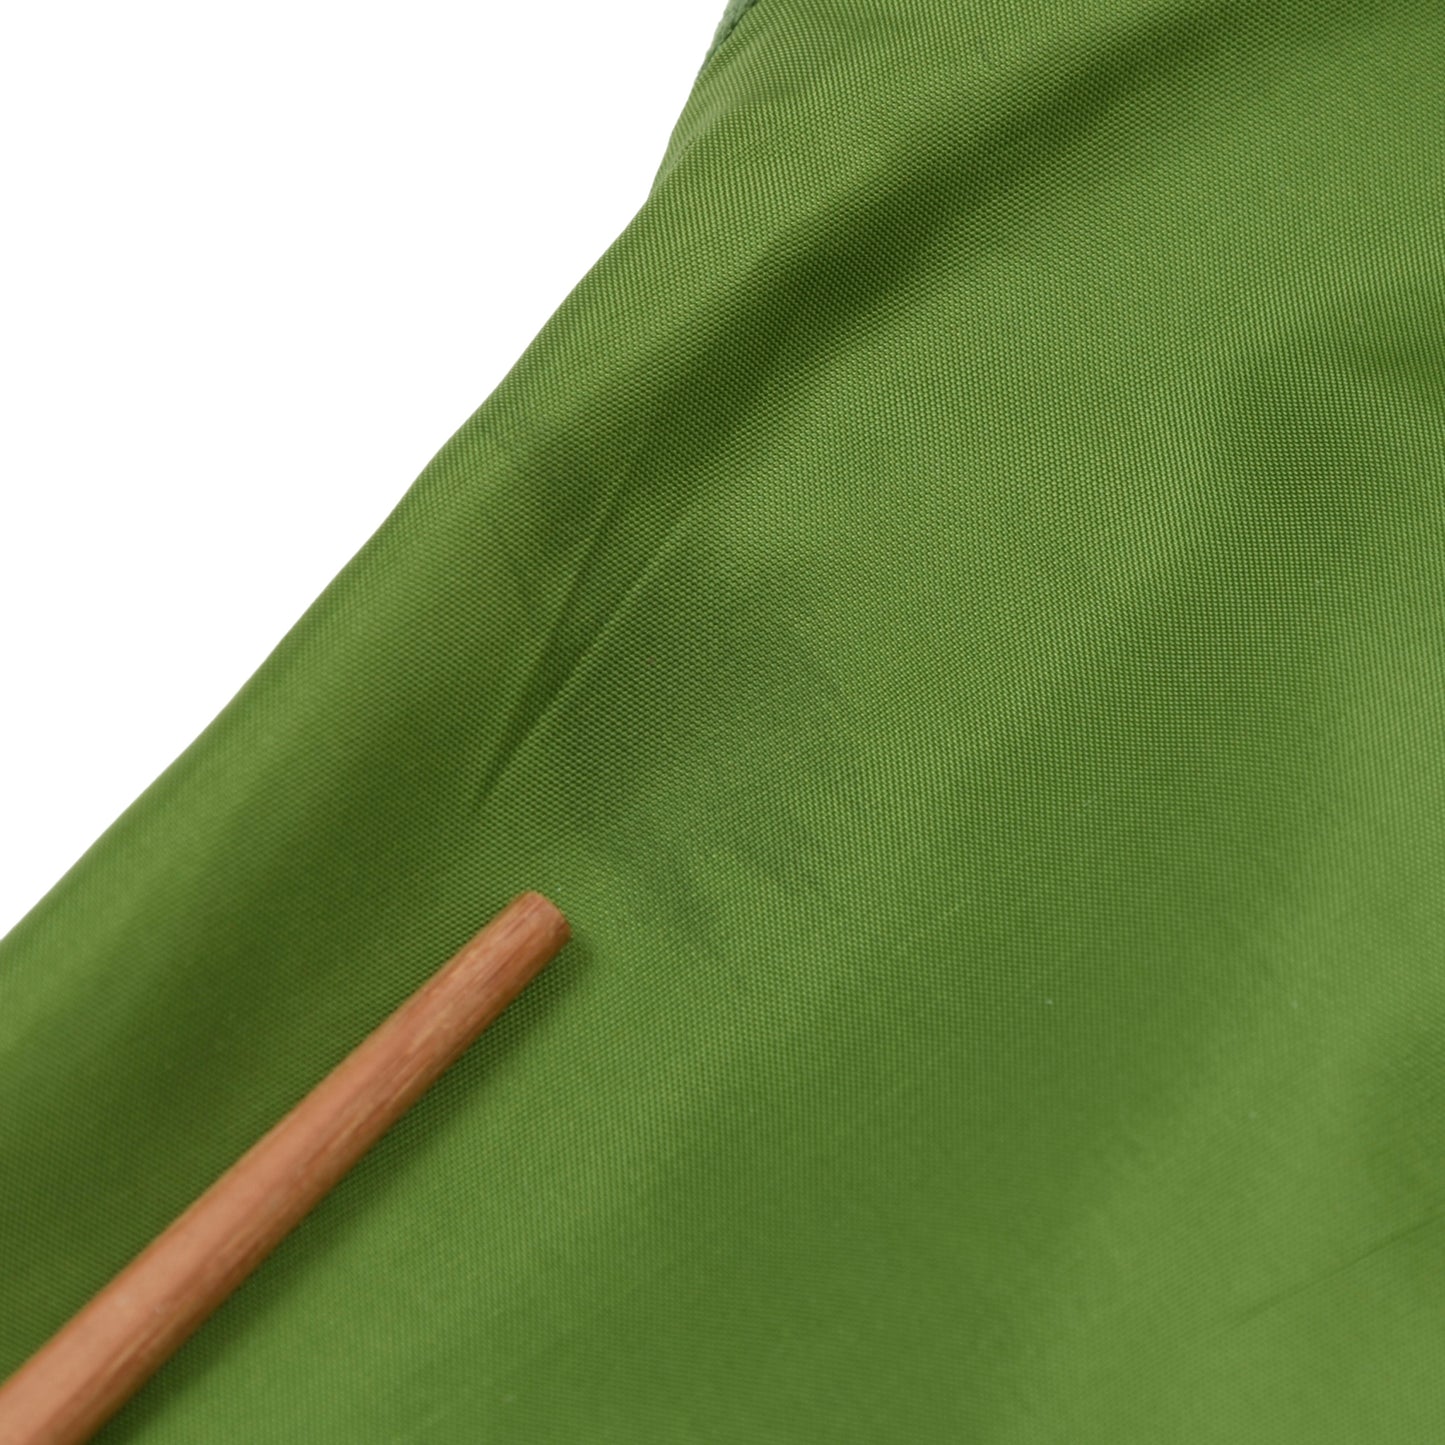 Allwerk Linen Vest/Trachtengilet Size 56 - Green